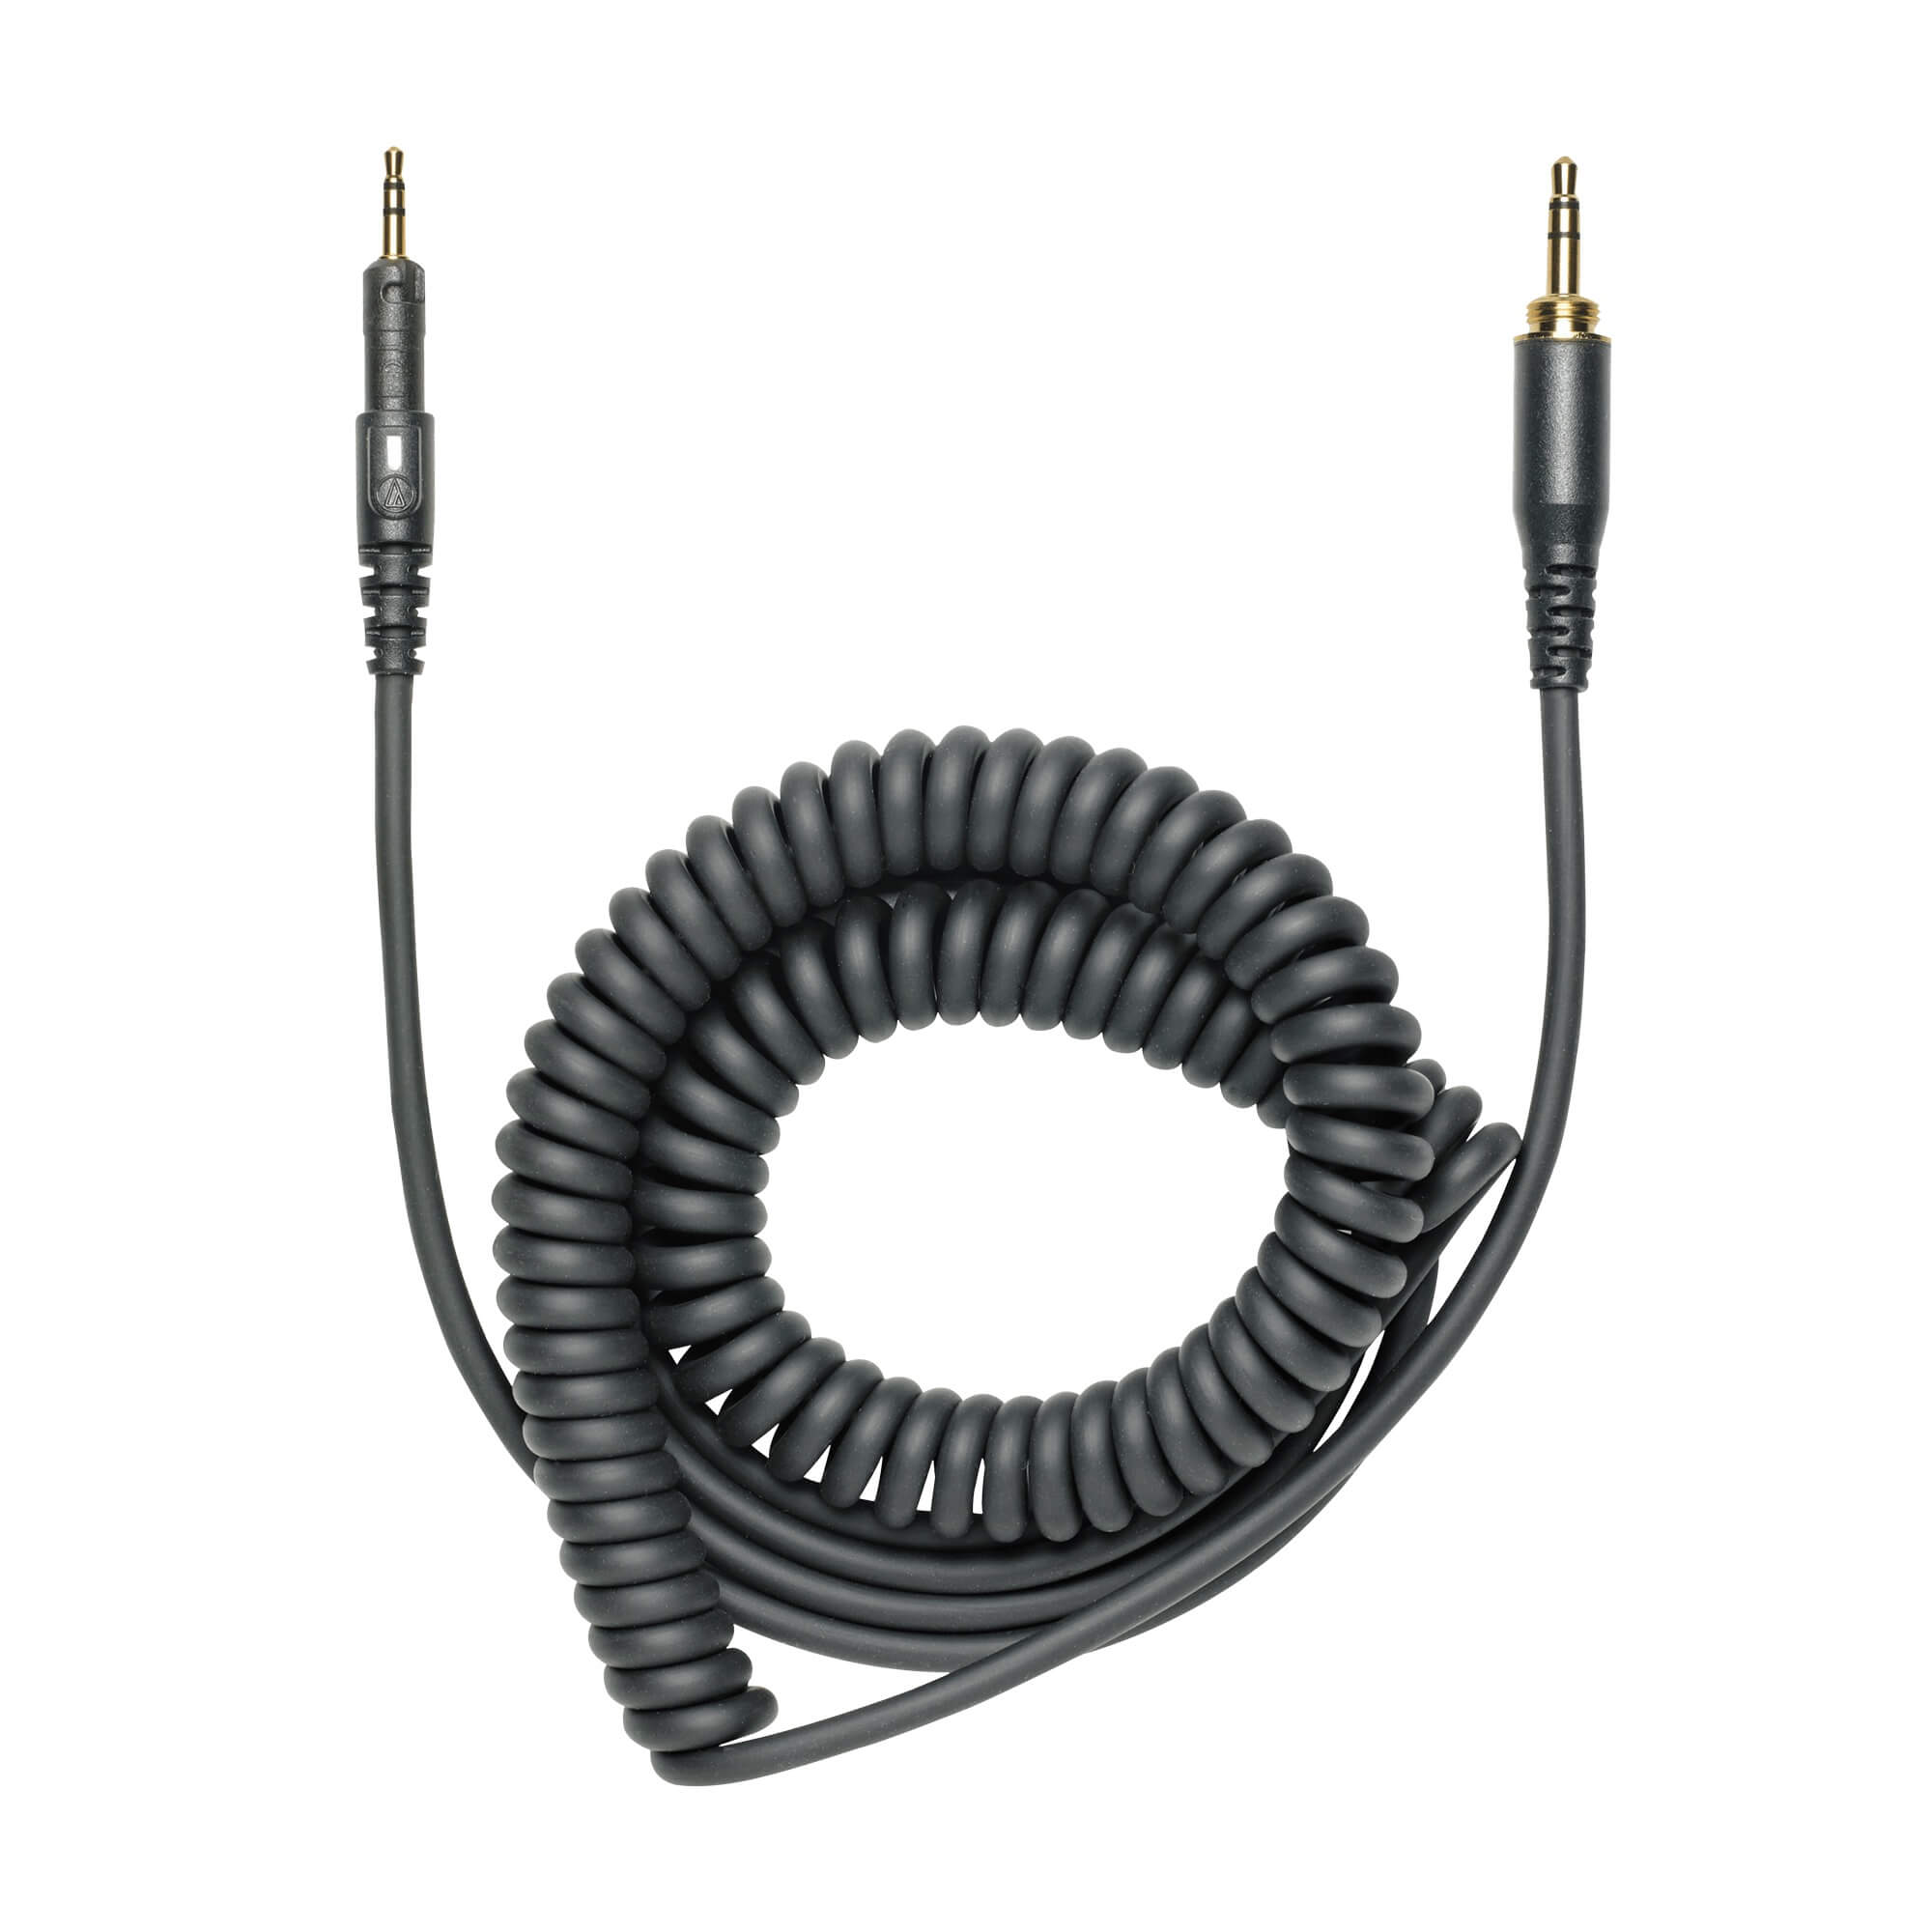 Audio-Technica ATH-M60x Professional Monitor Headphones, detachable coiled audio cable